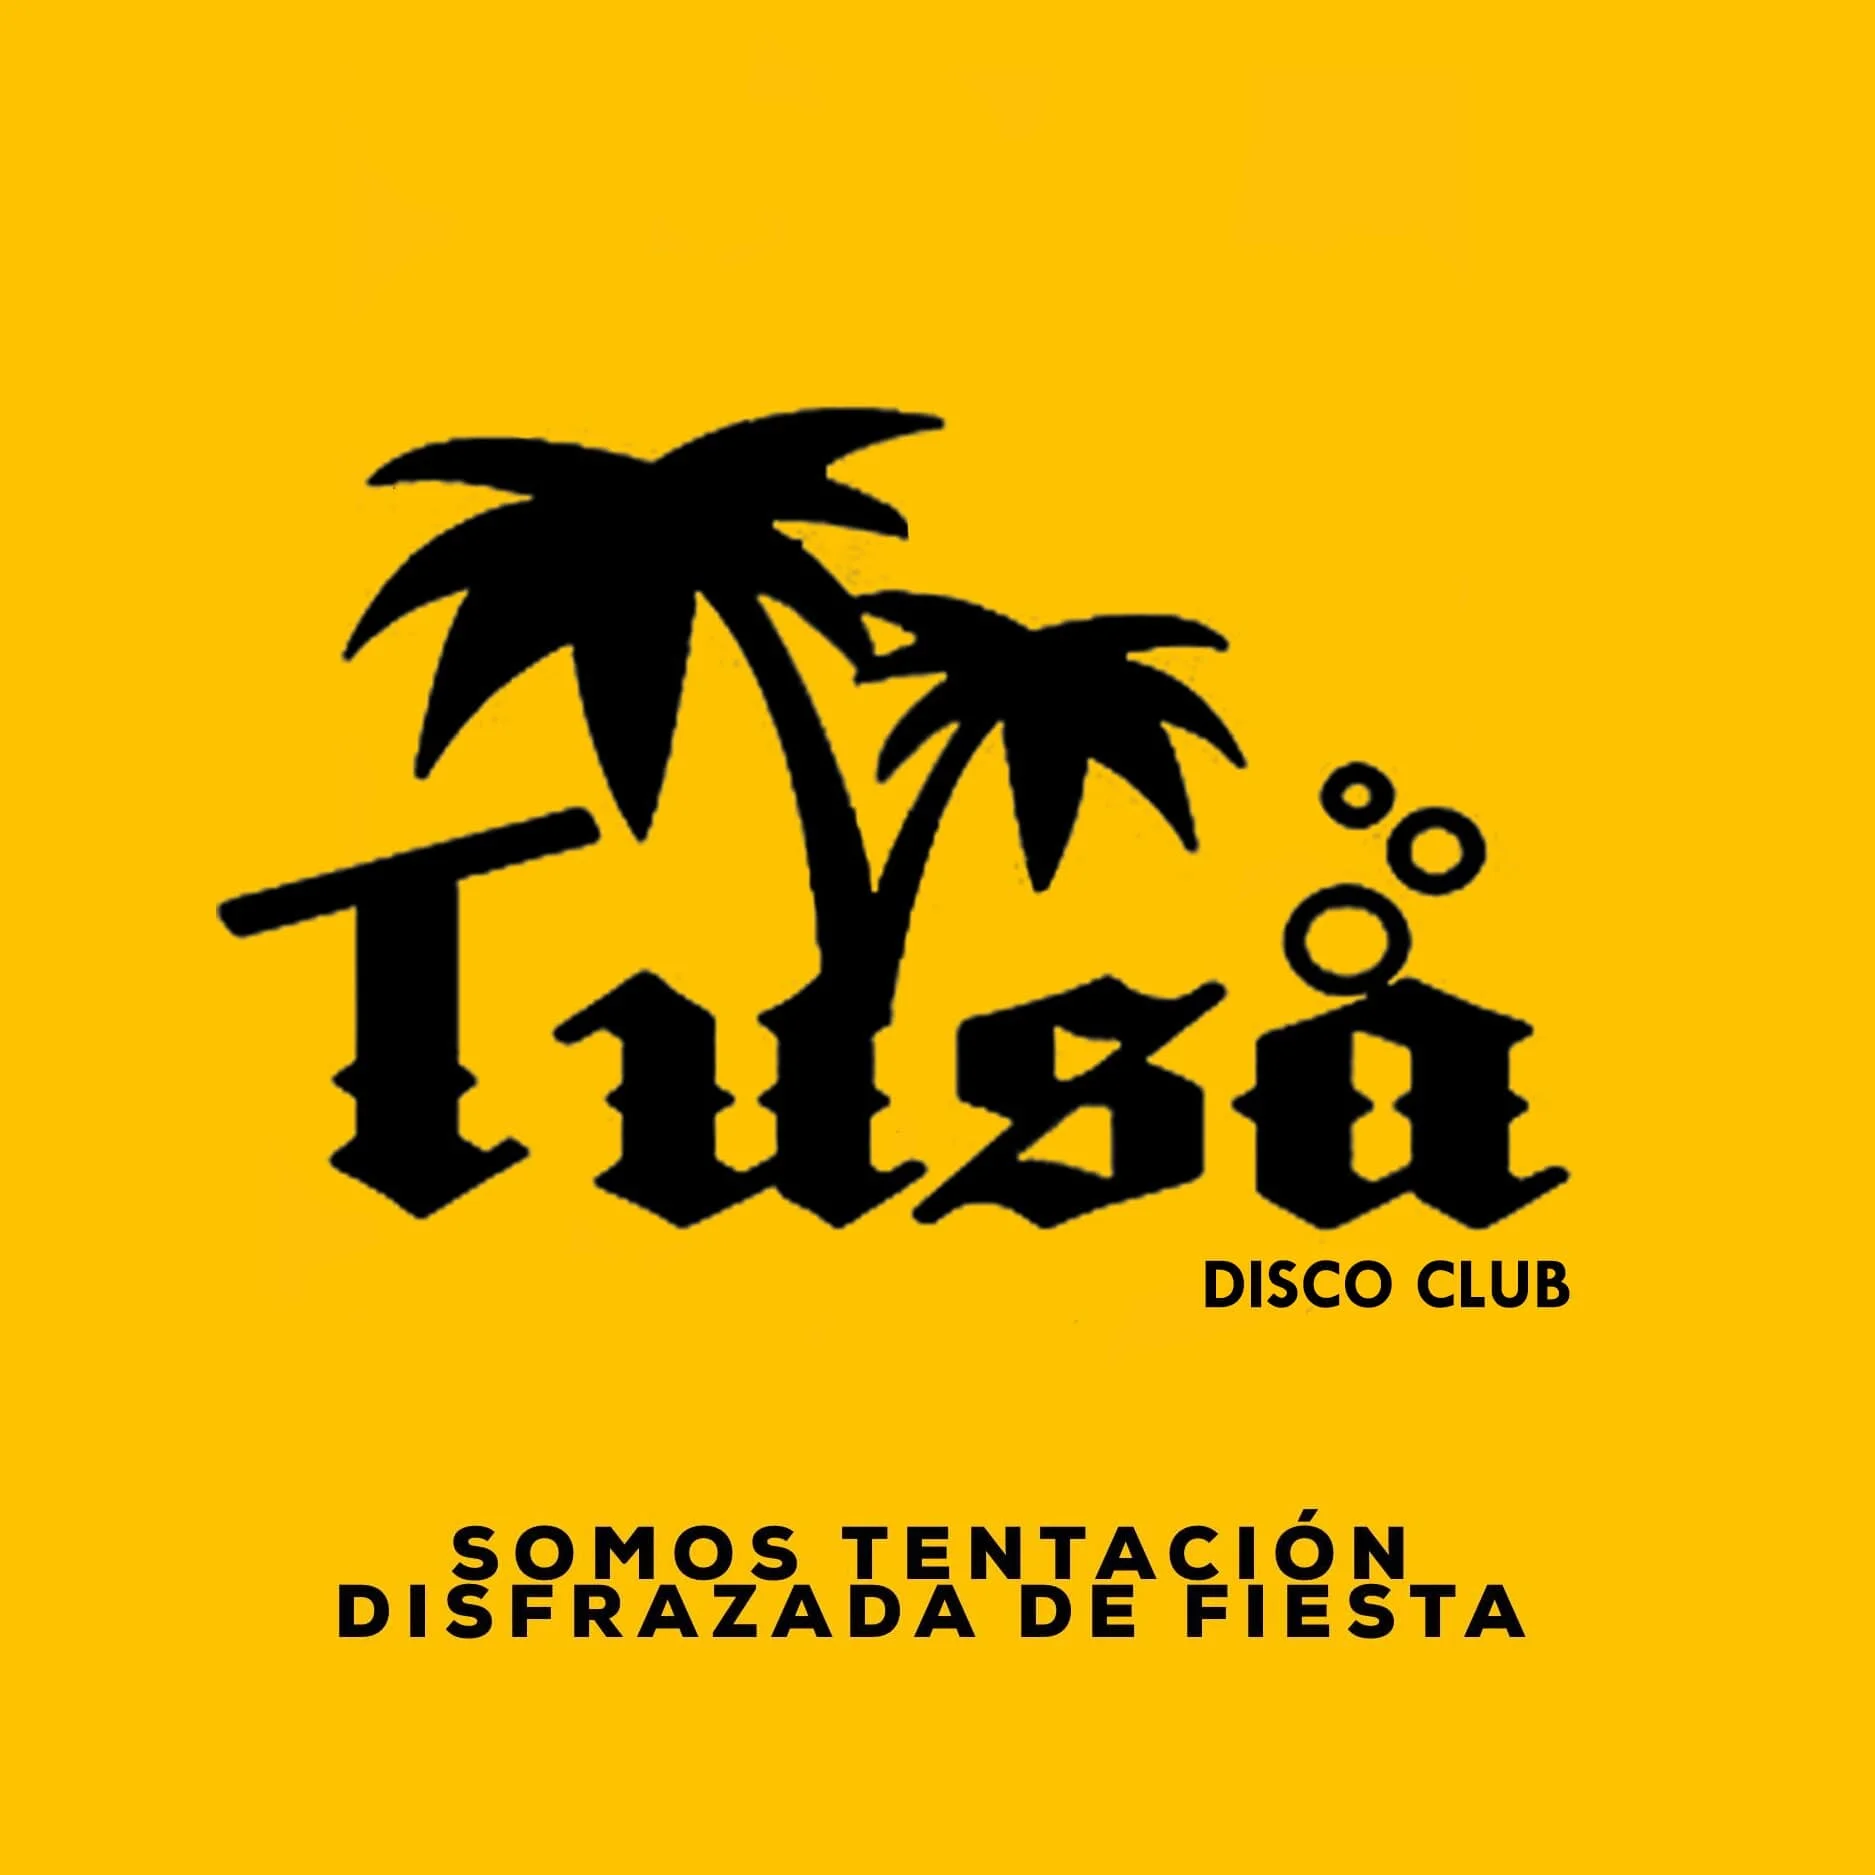 Discotecas-la-tusa-disco-club-22569